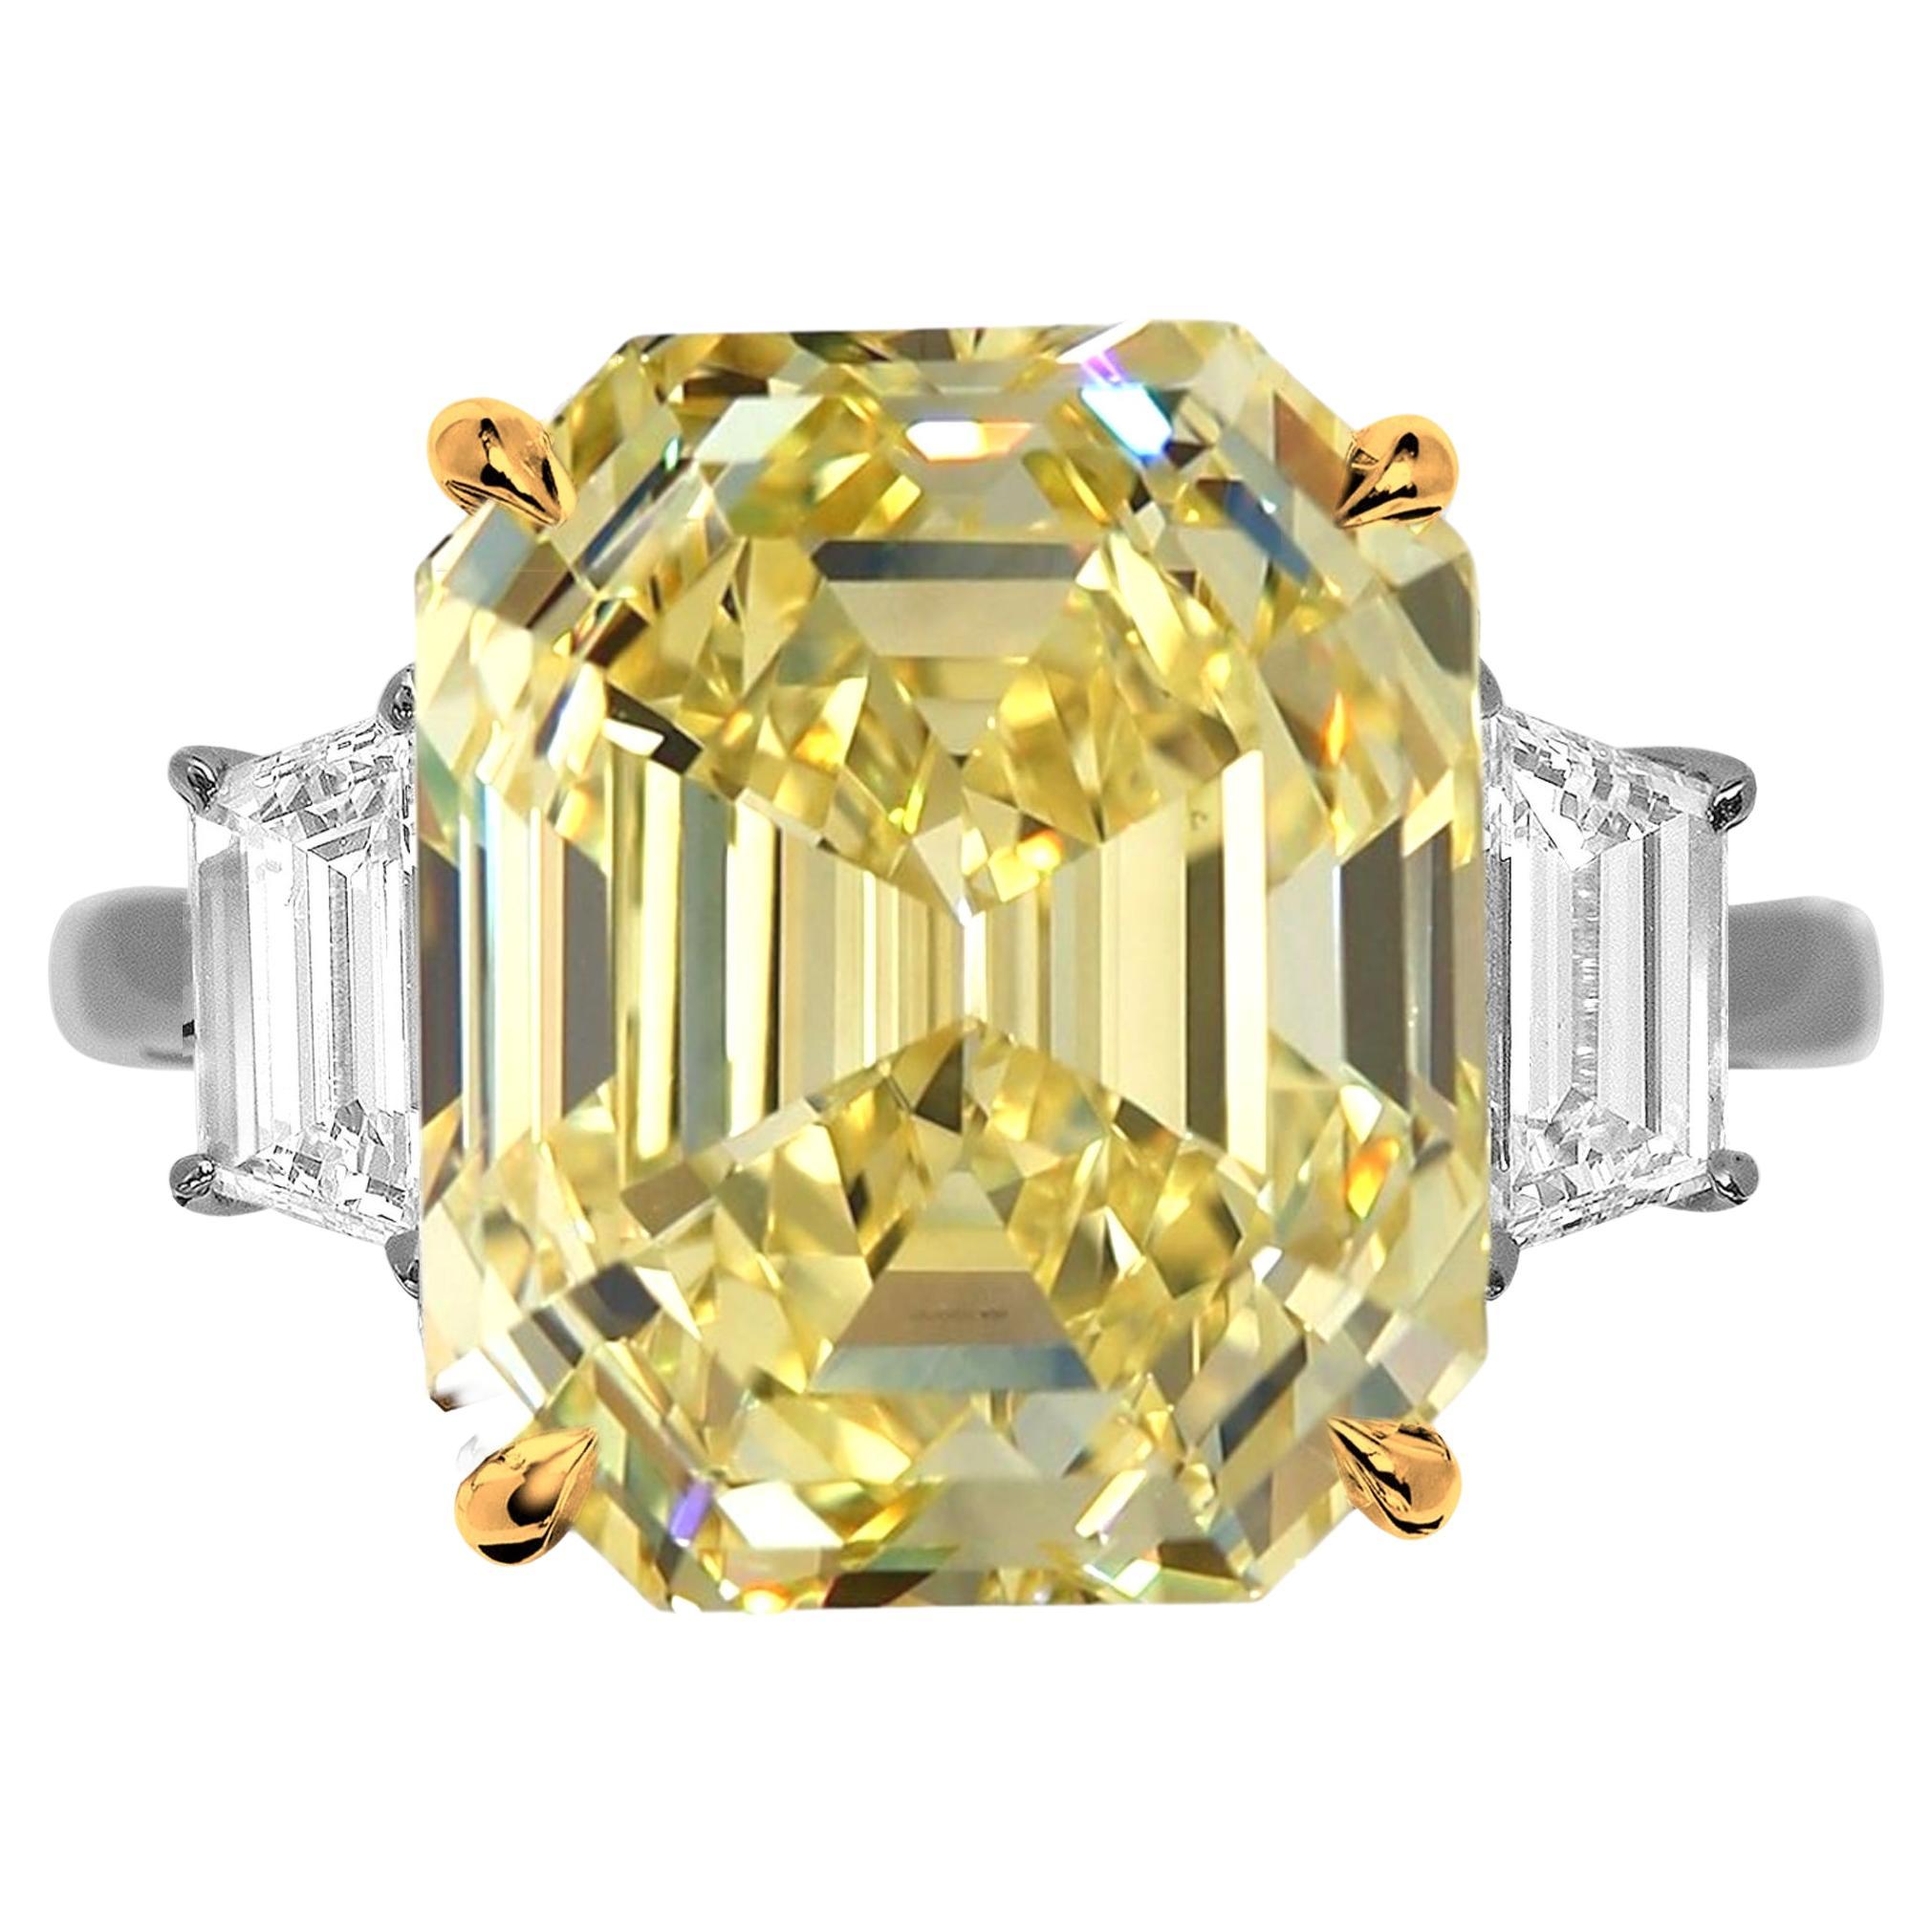 How much money is a 7 carat diamond?